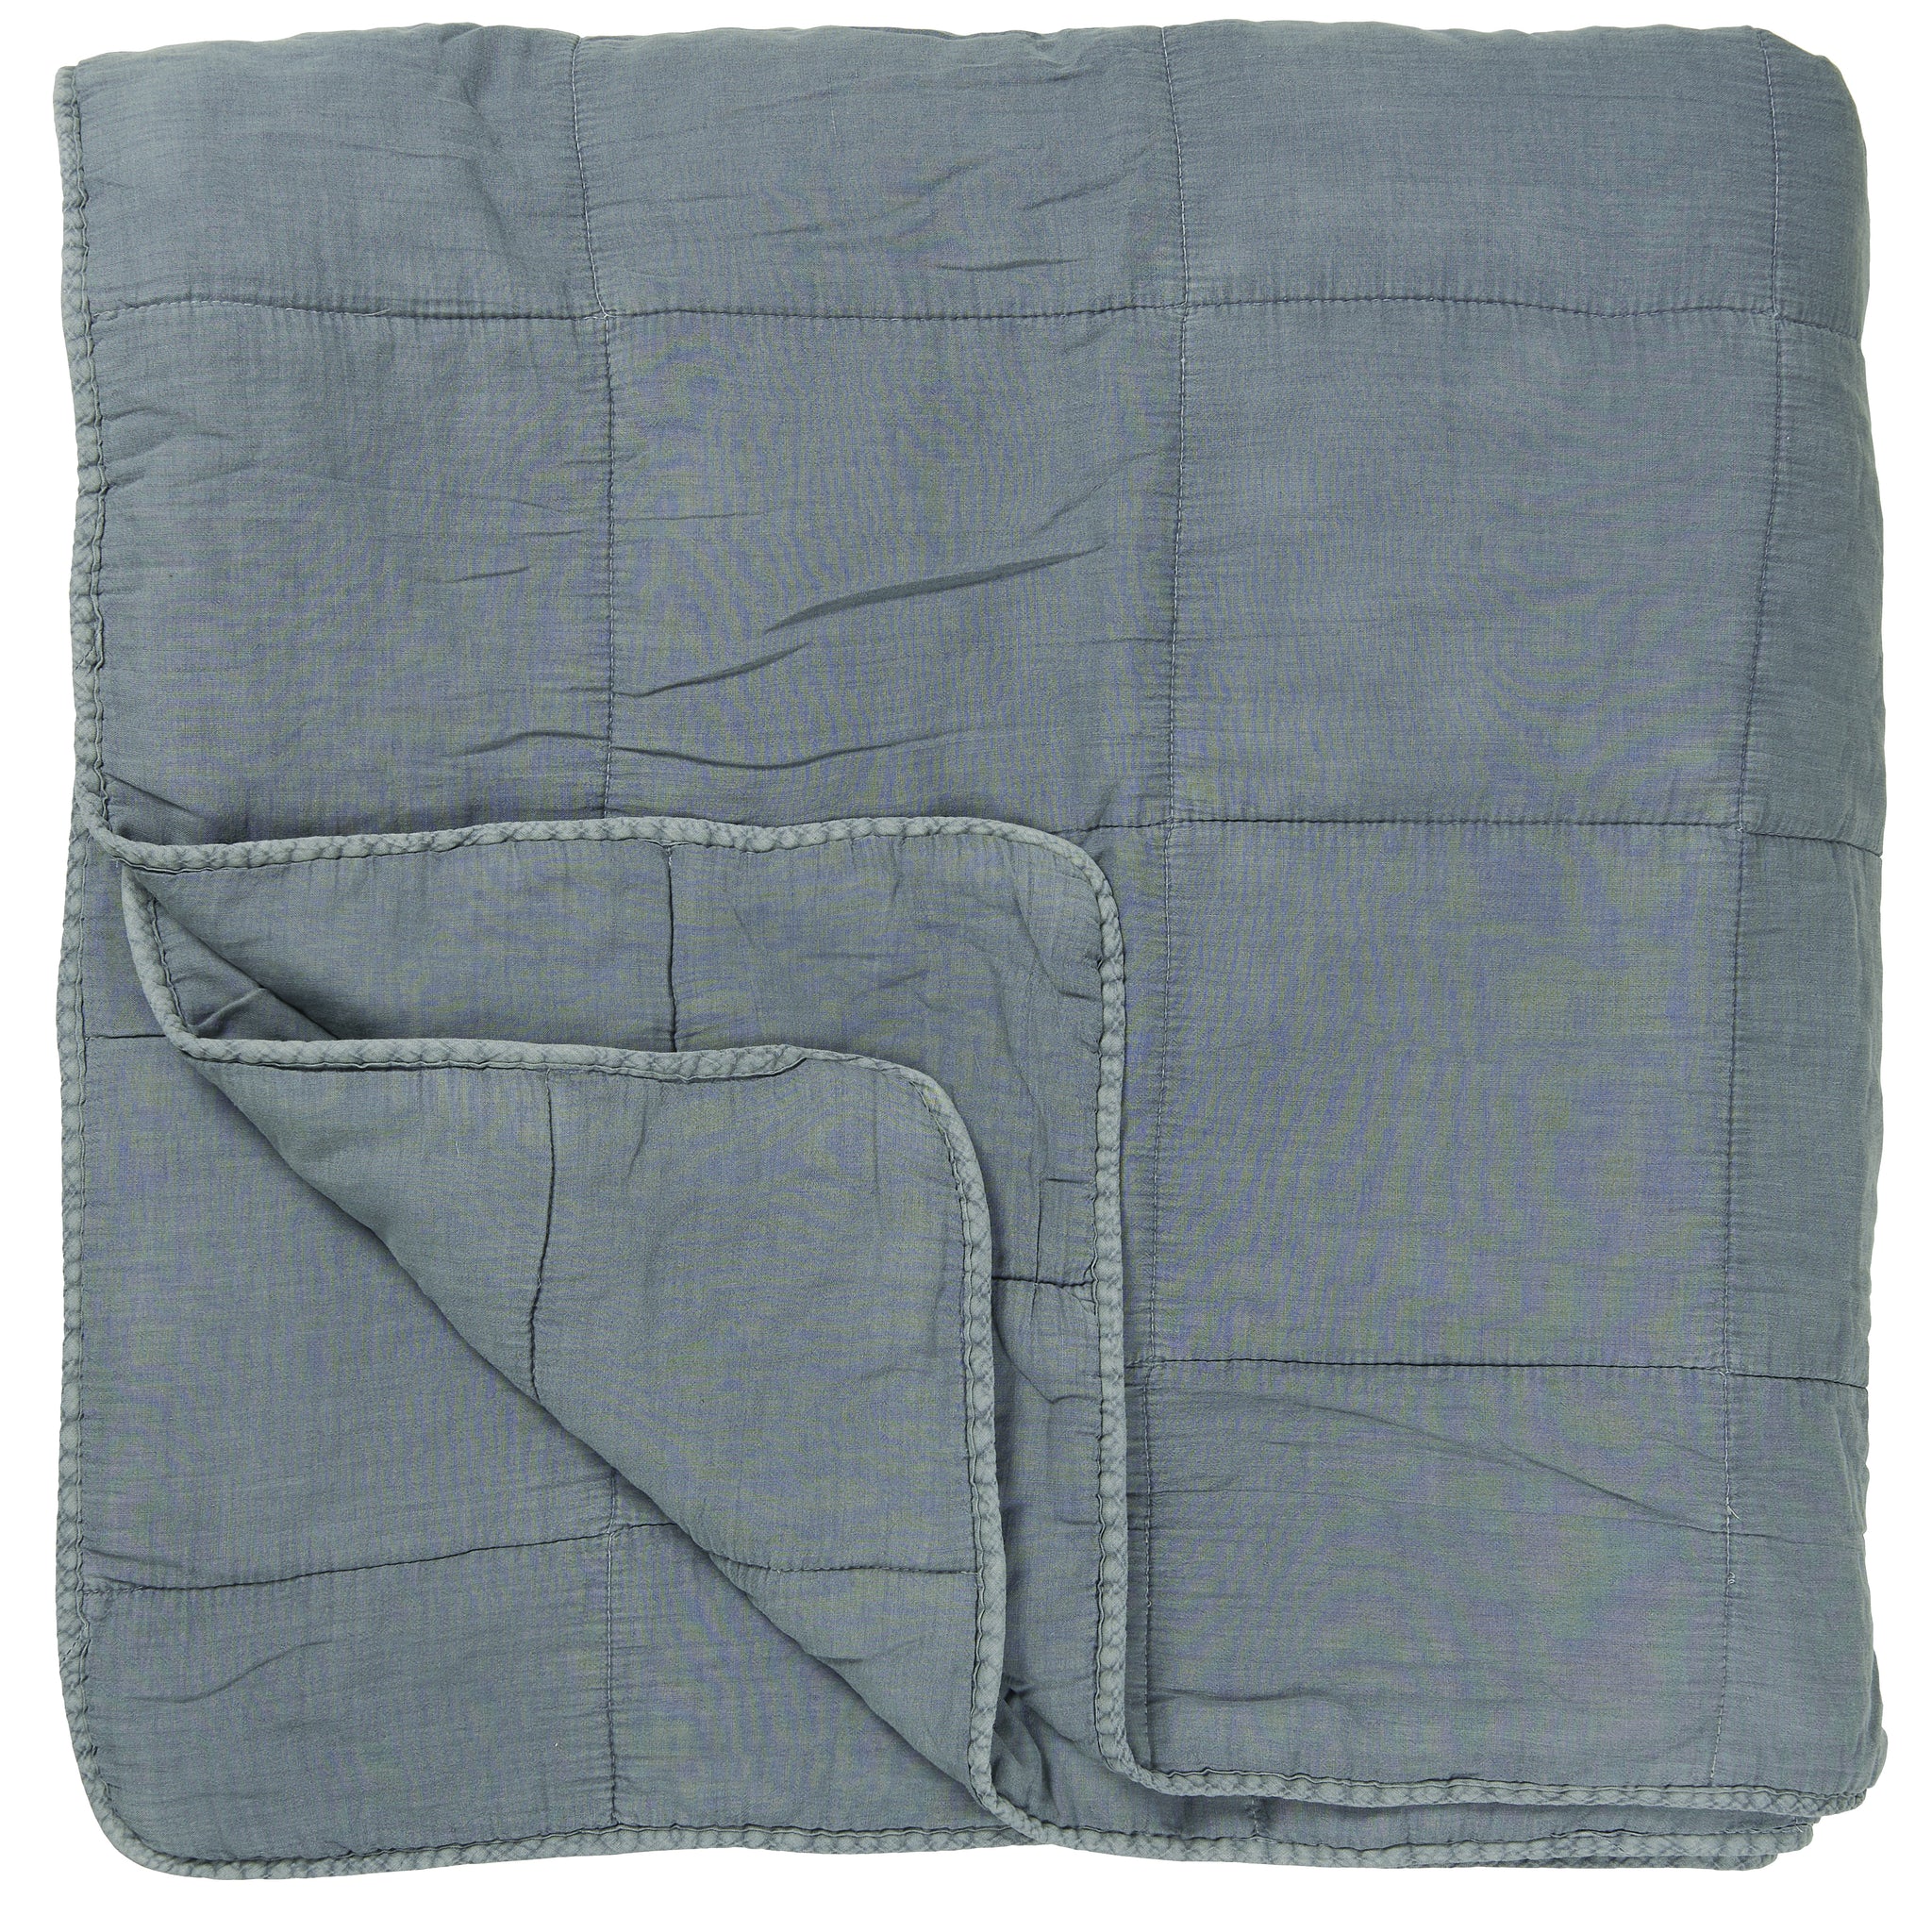 Ib Laursen - Vintage quilt sengetæppe, dobbelt støvblå/grå 